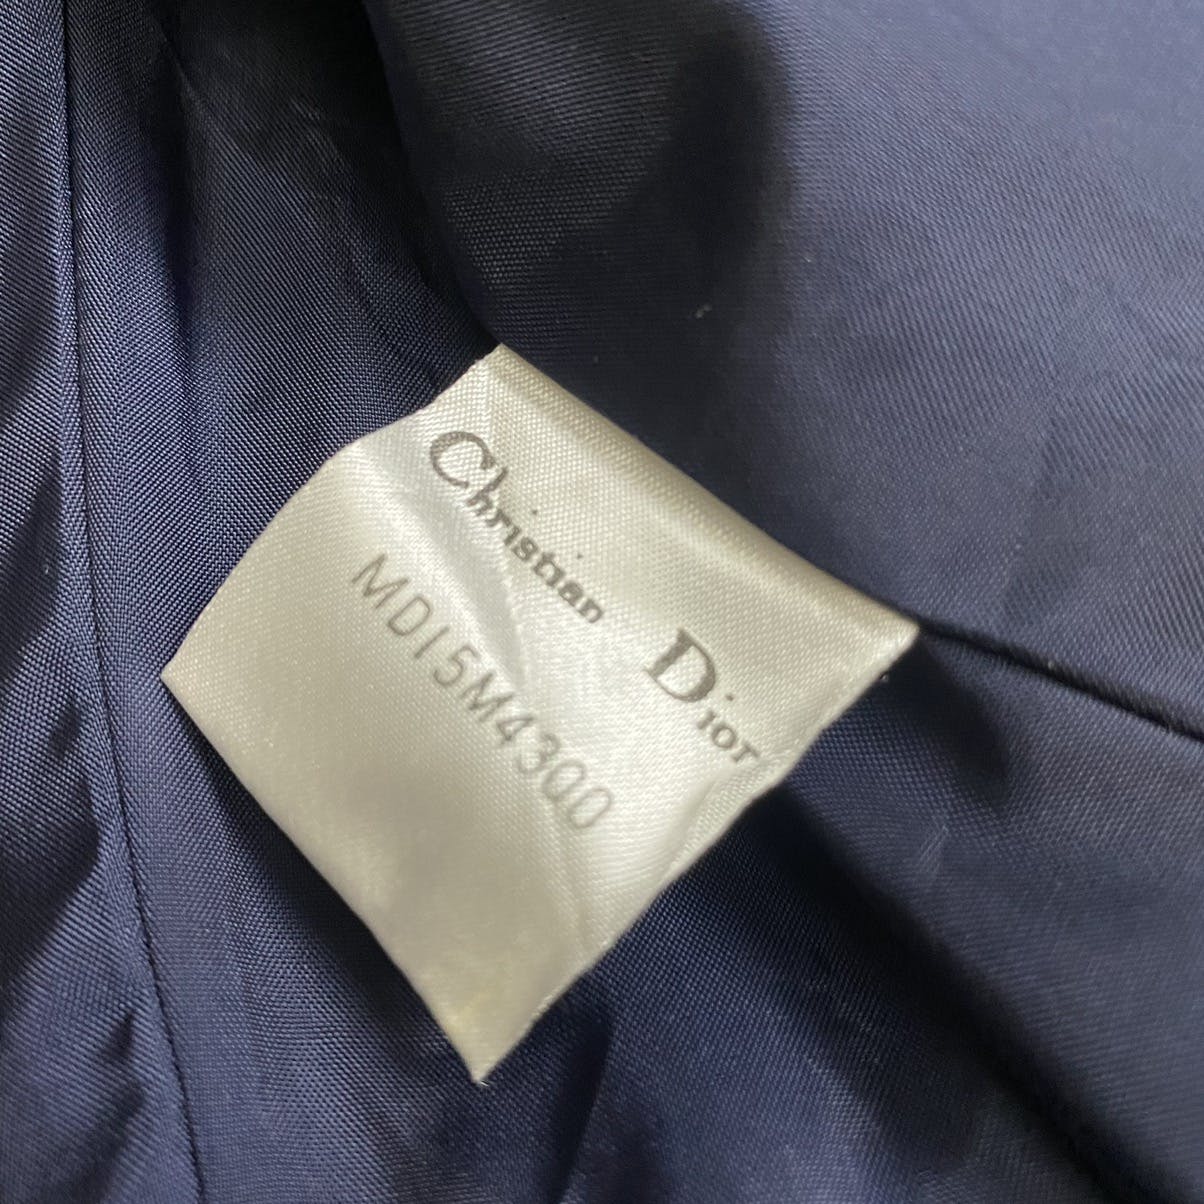 Christian Dior Monsieur - Christian Dior Single-Breasted Coat slant button Jacket - 11